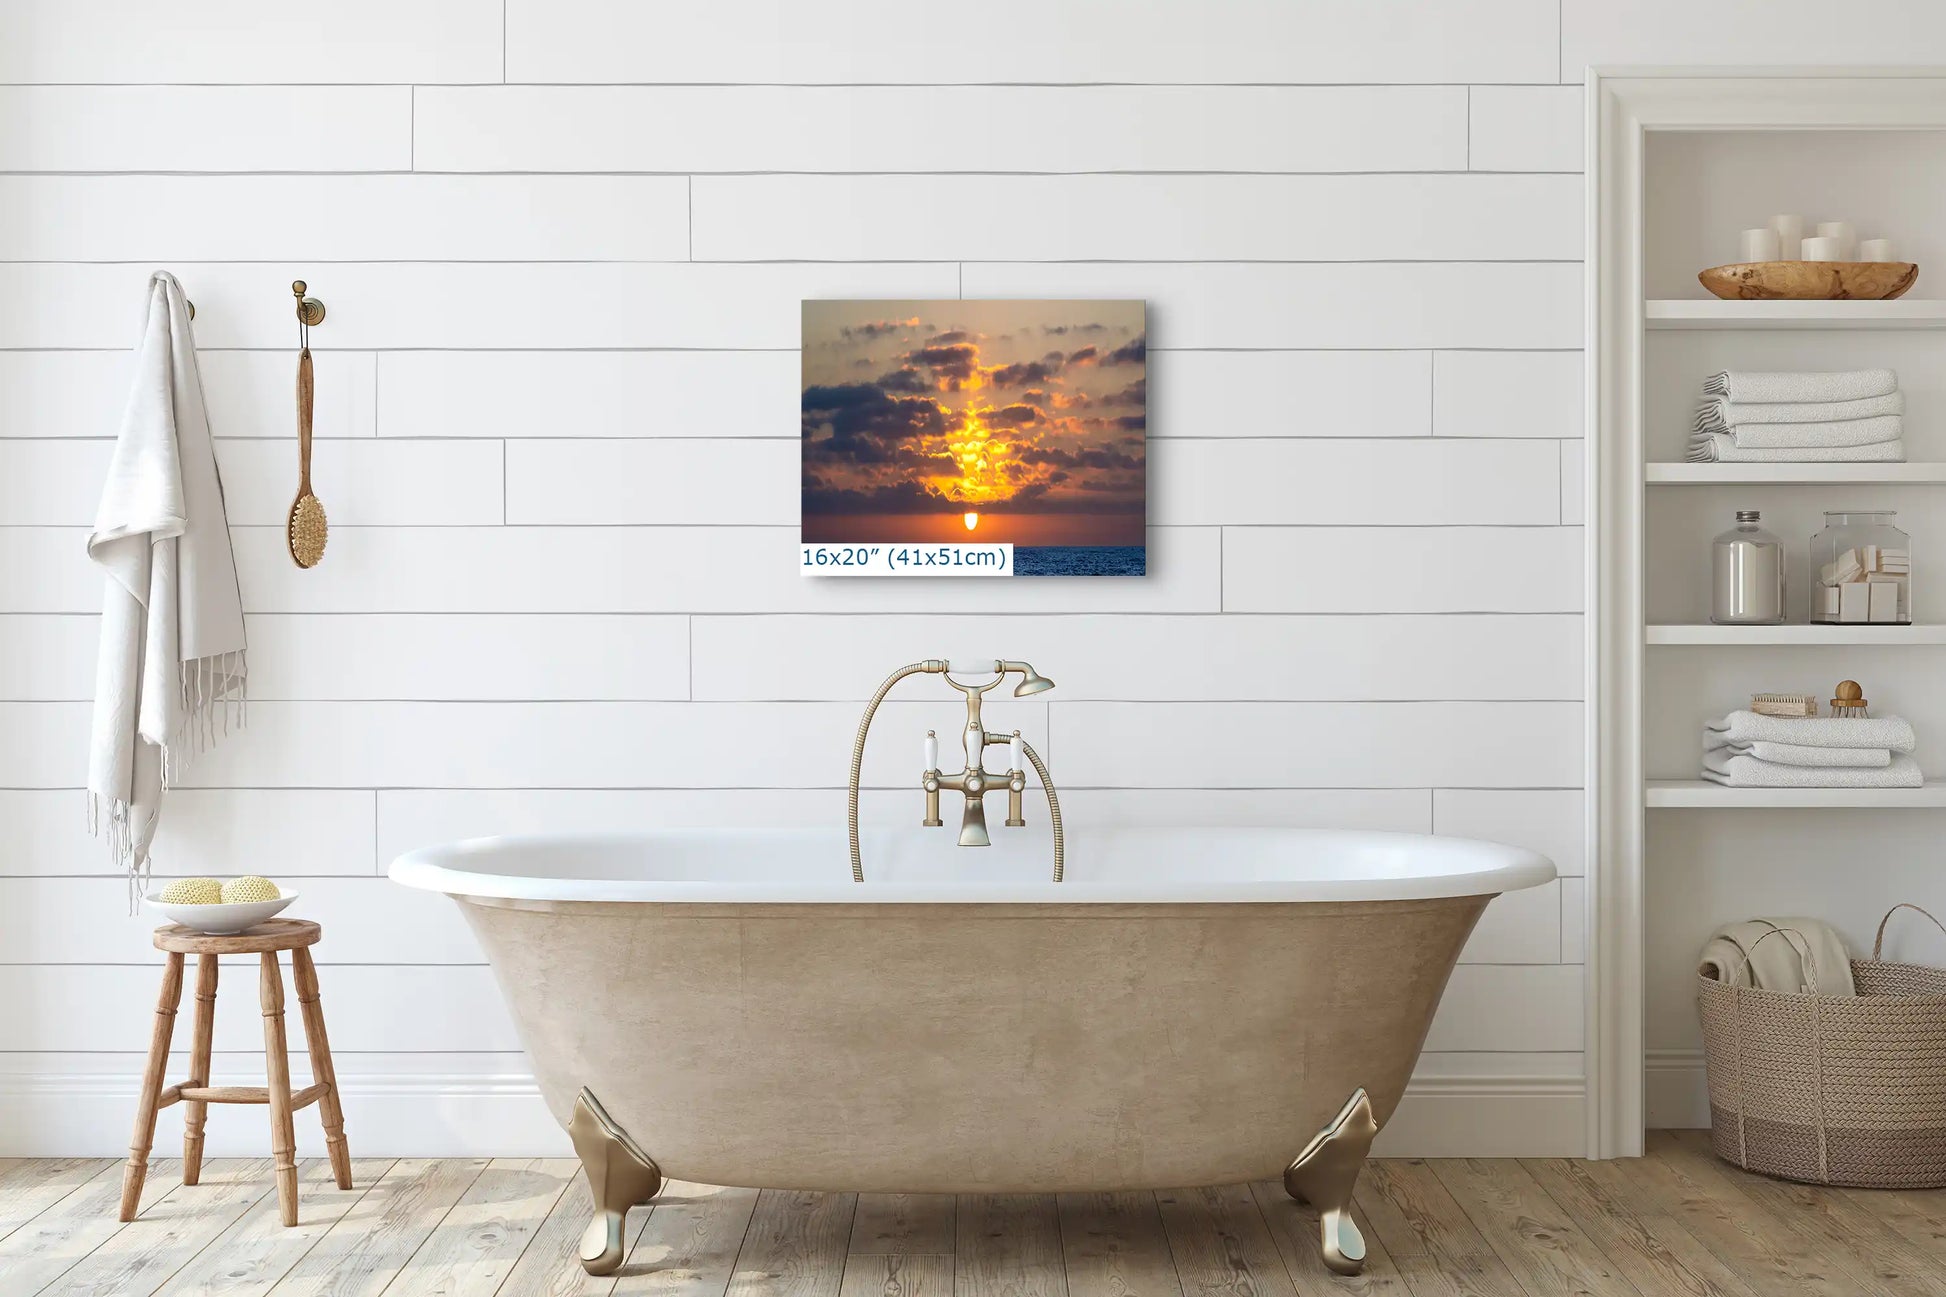 A serene bathroom setting featuring a 16x20 inch canvas print of a golden ocean sunset above the bathtub.